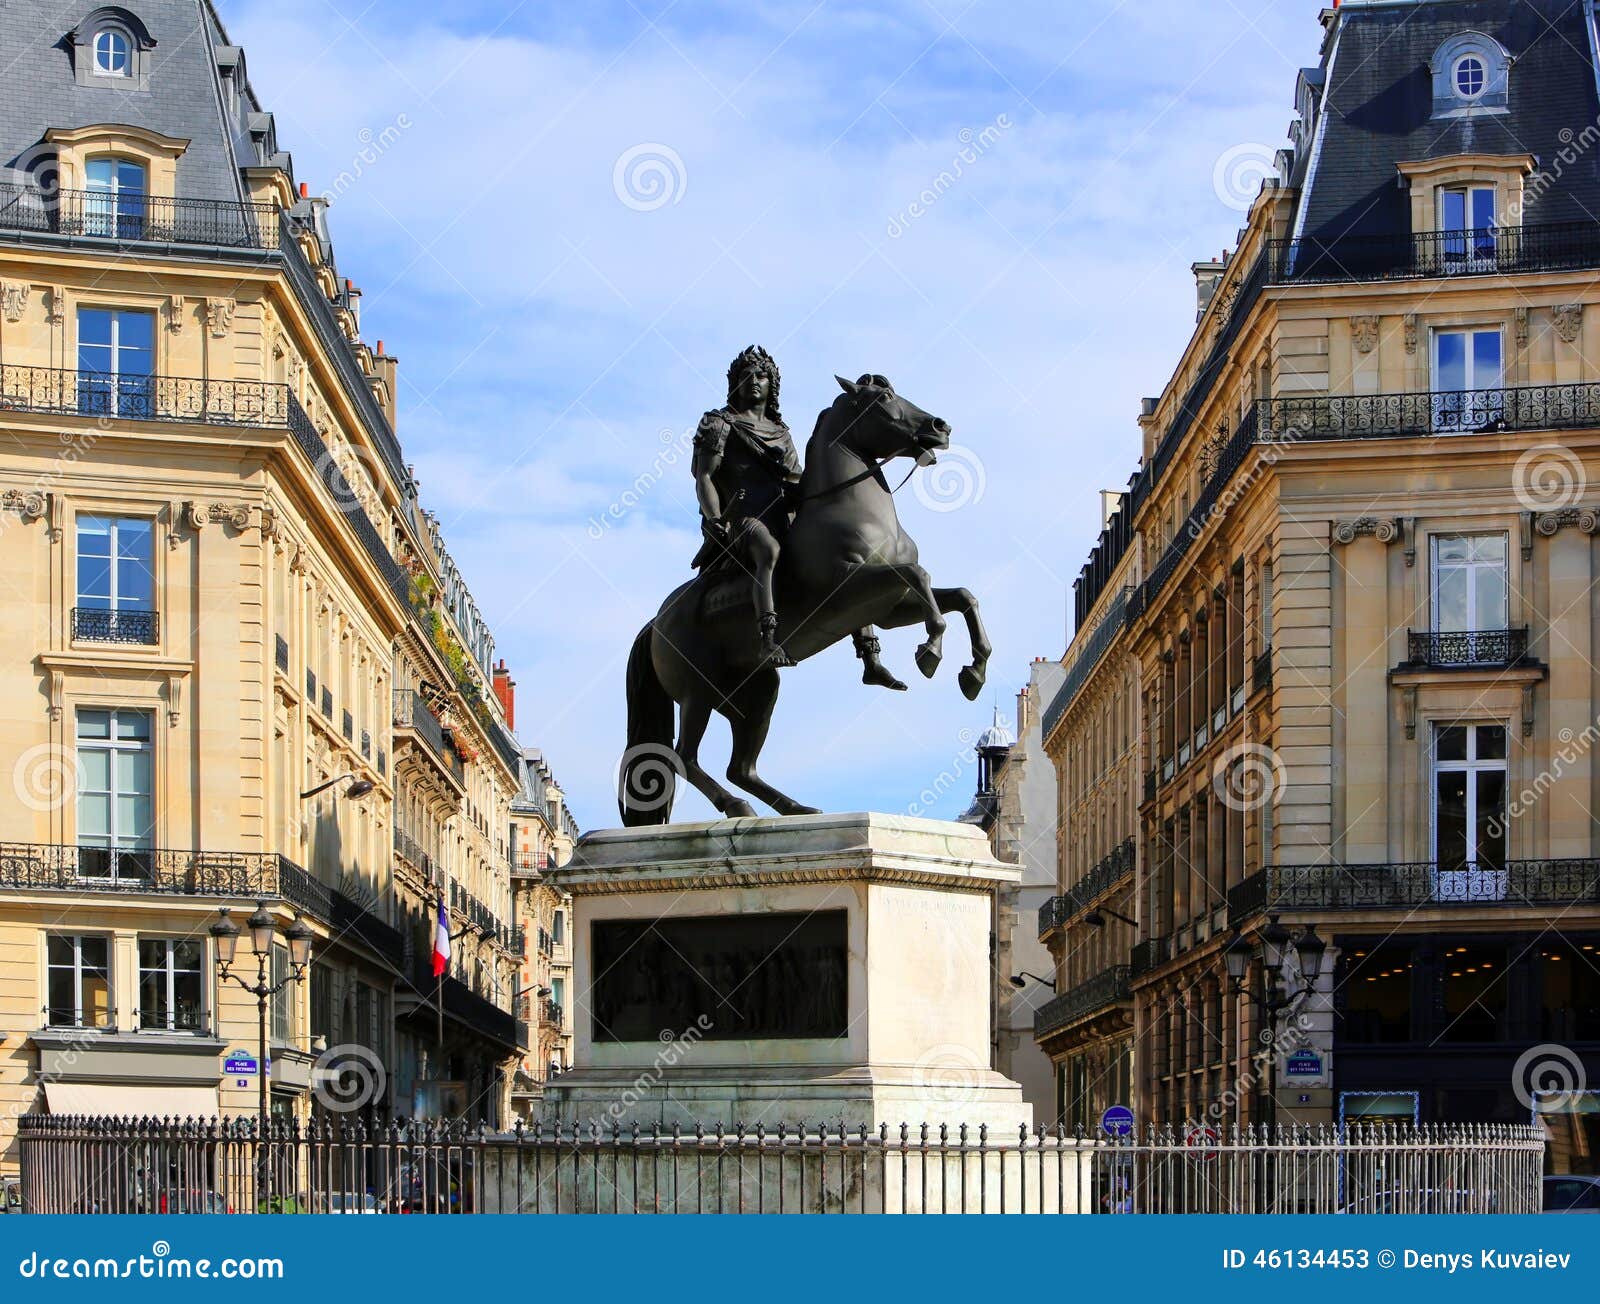 statue of louis xiv in paris, france